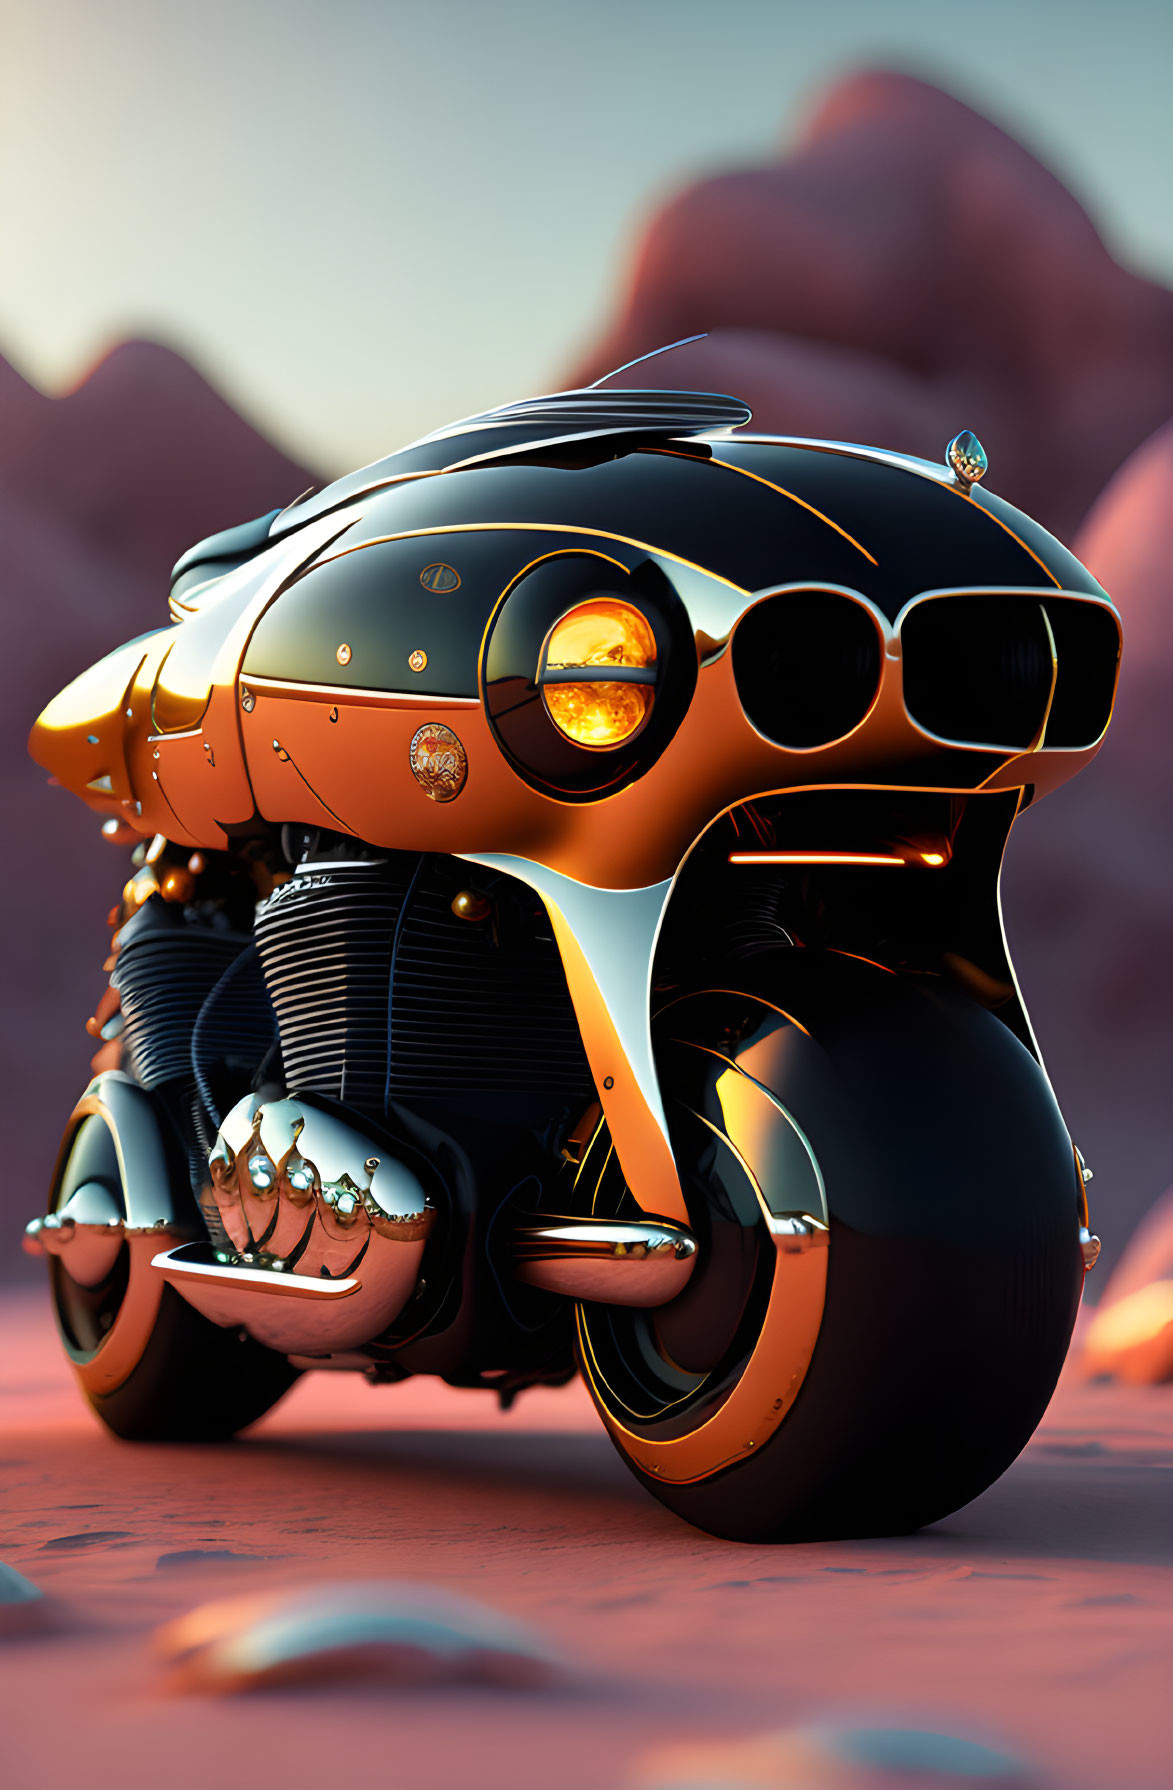 Sleek black and orange futuristic motorcycle in rocky landscape